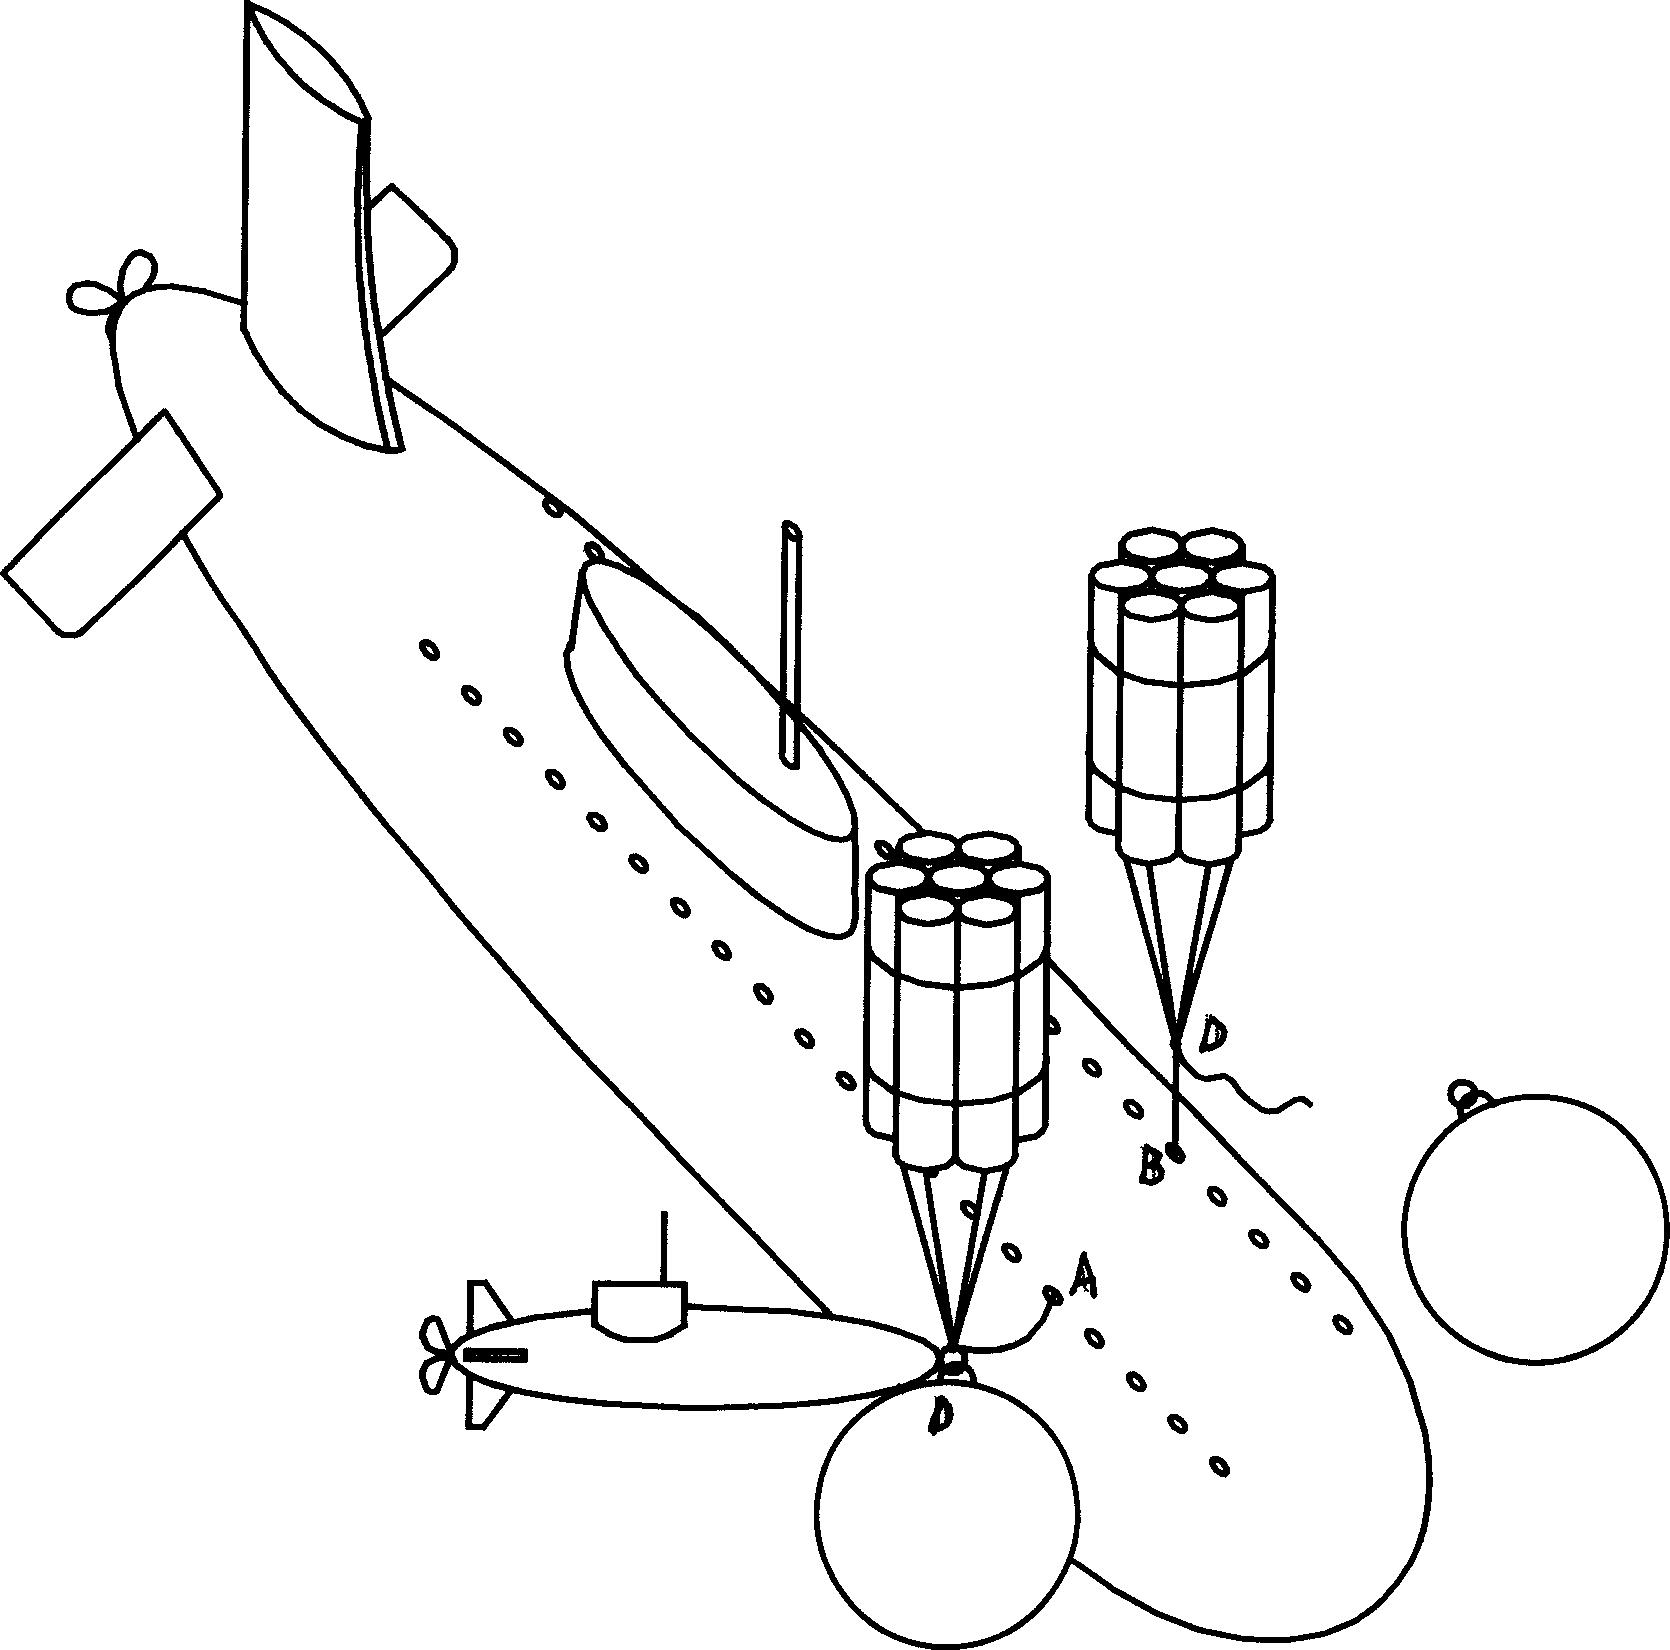 Energy-accumulating hoist method for raising sunken ship or hoisting ultra-long or ultra-weight object